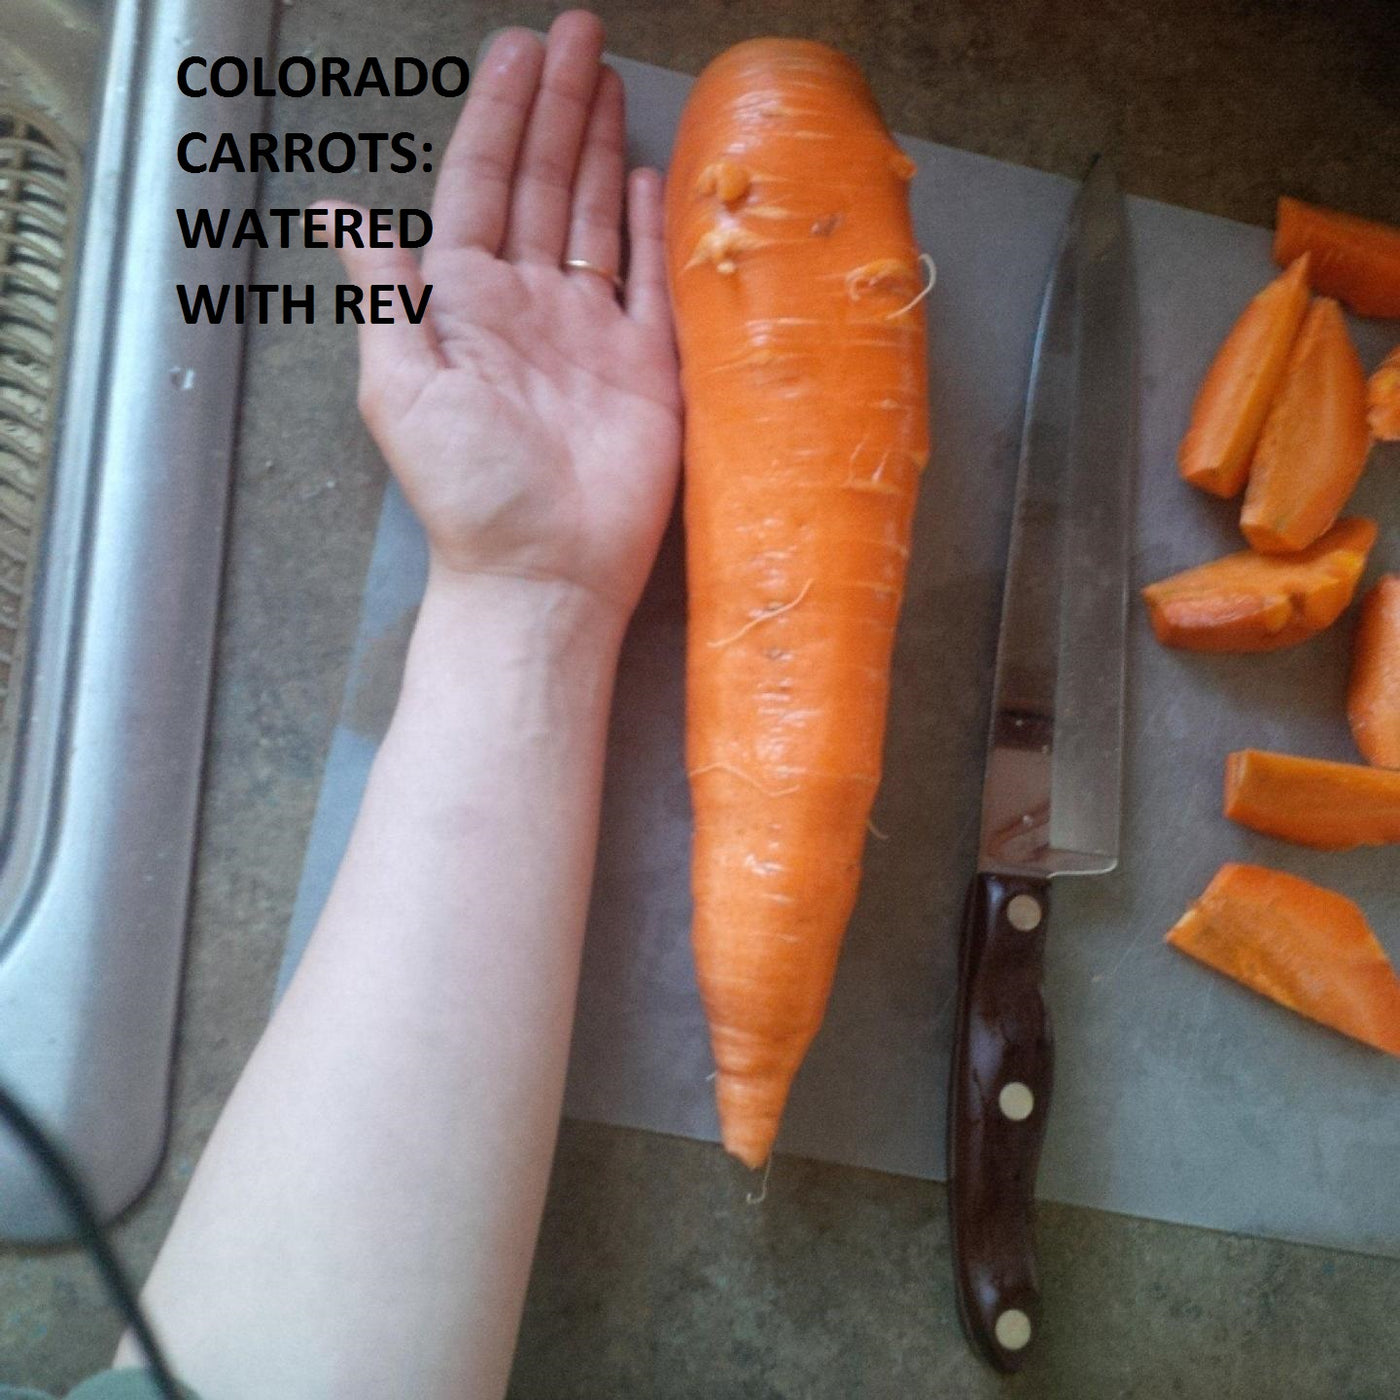 Carrot Grown with Dakota REV Organic Growth Stimulant